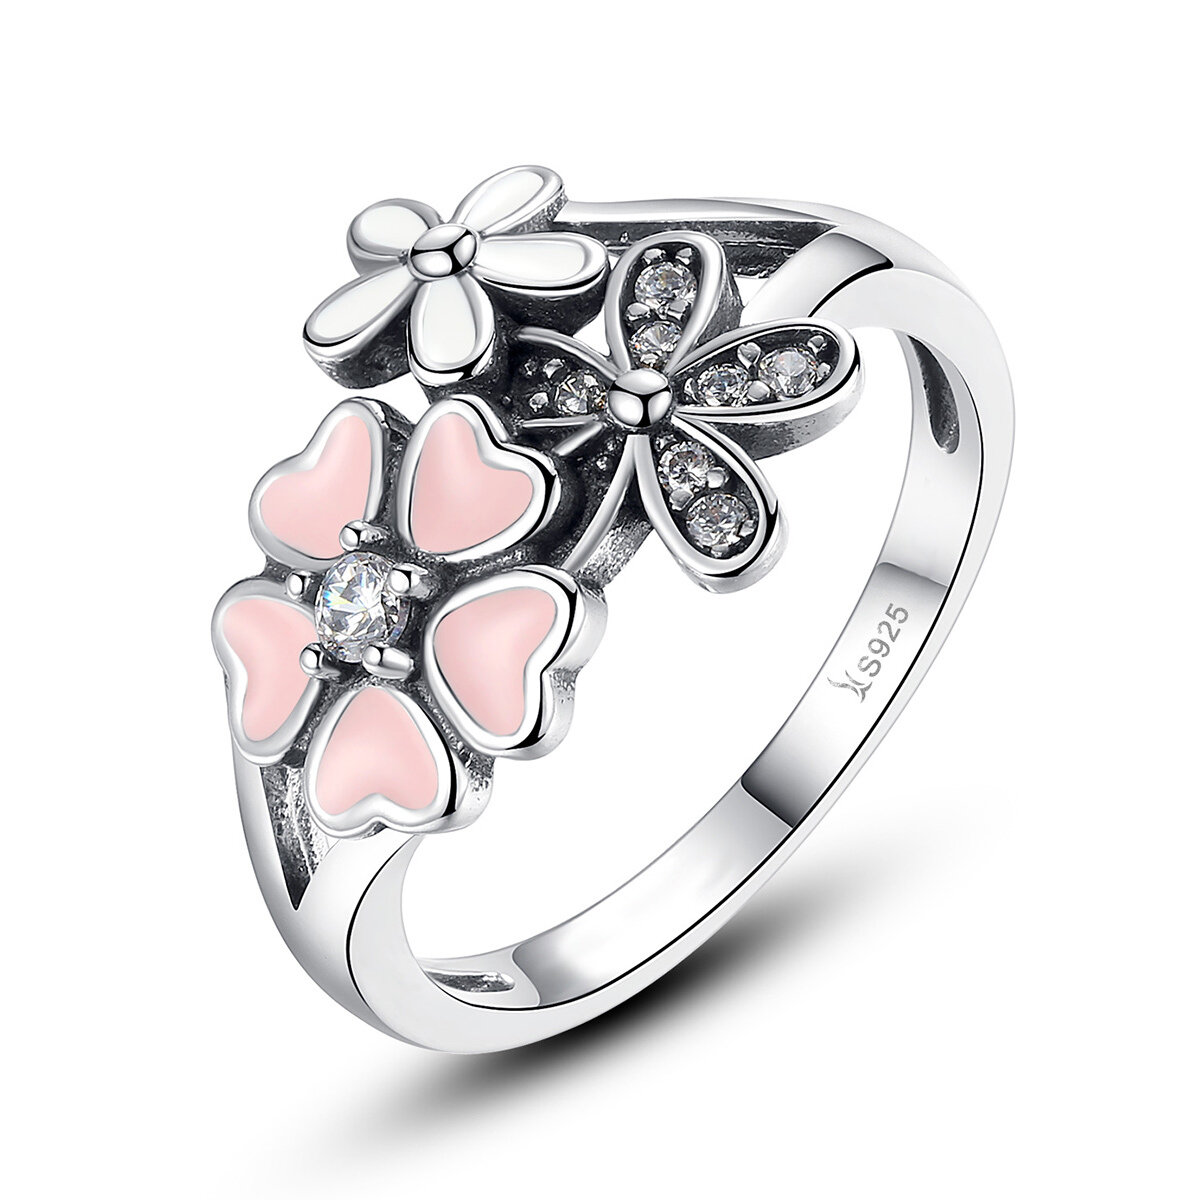 GemKing Cherry Blossom S925 Sterling Silver rings